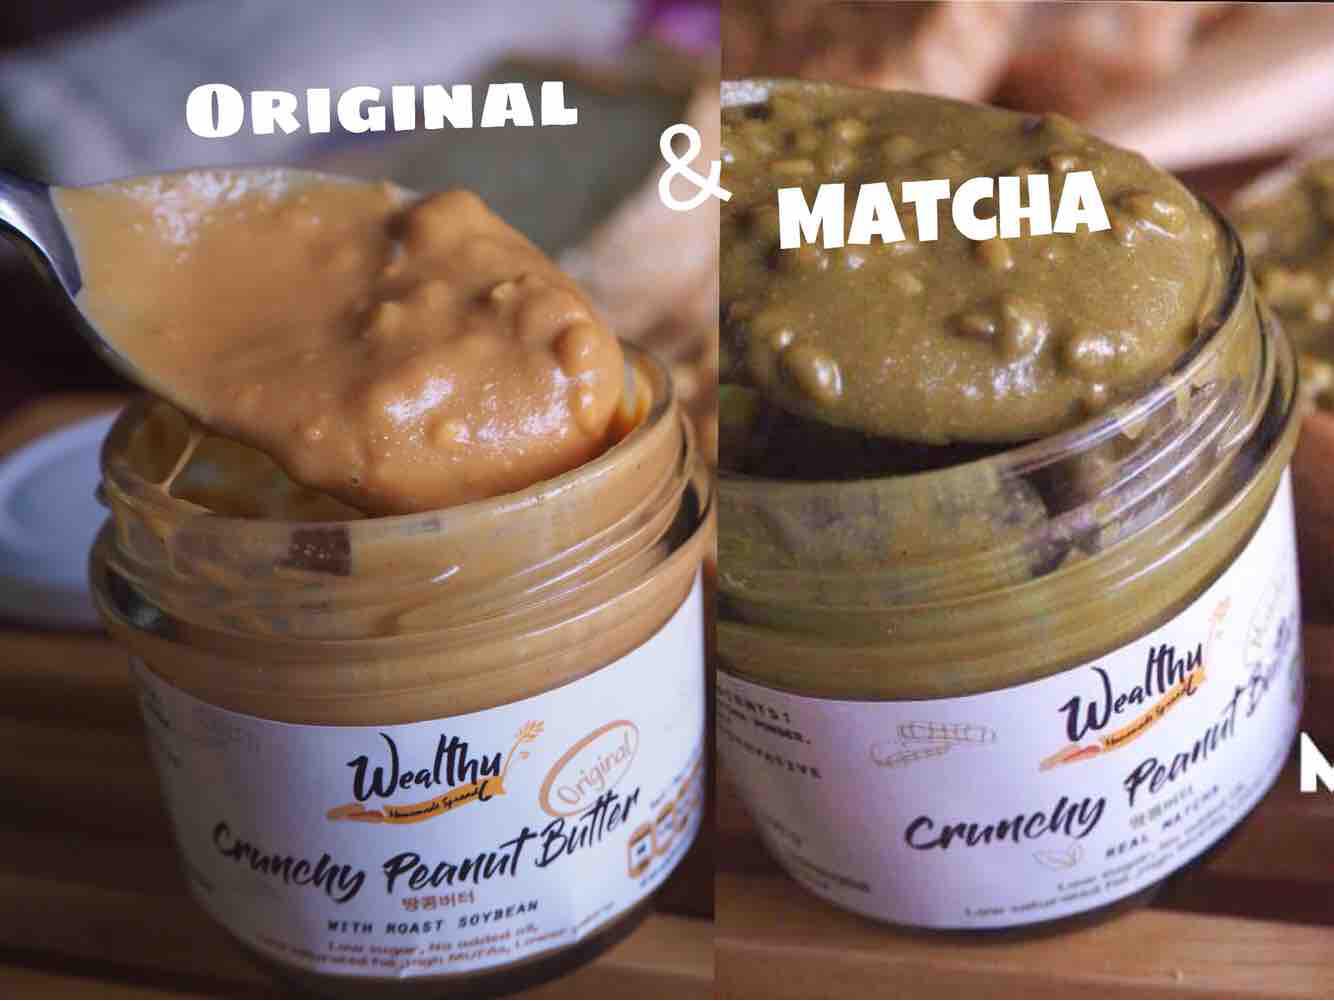 Wealthy Peanut Butter crunchy pack2 มัจฉะกับออริจินัล (matcha 100g & original 100g)